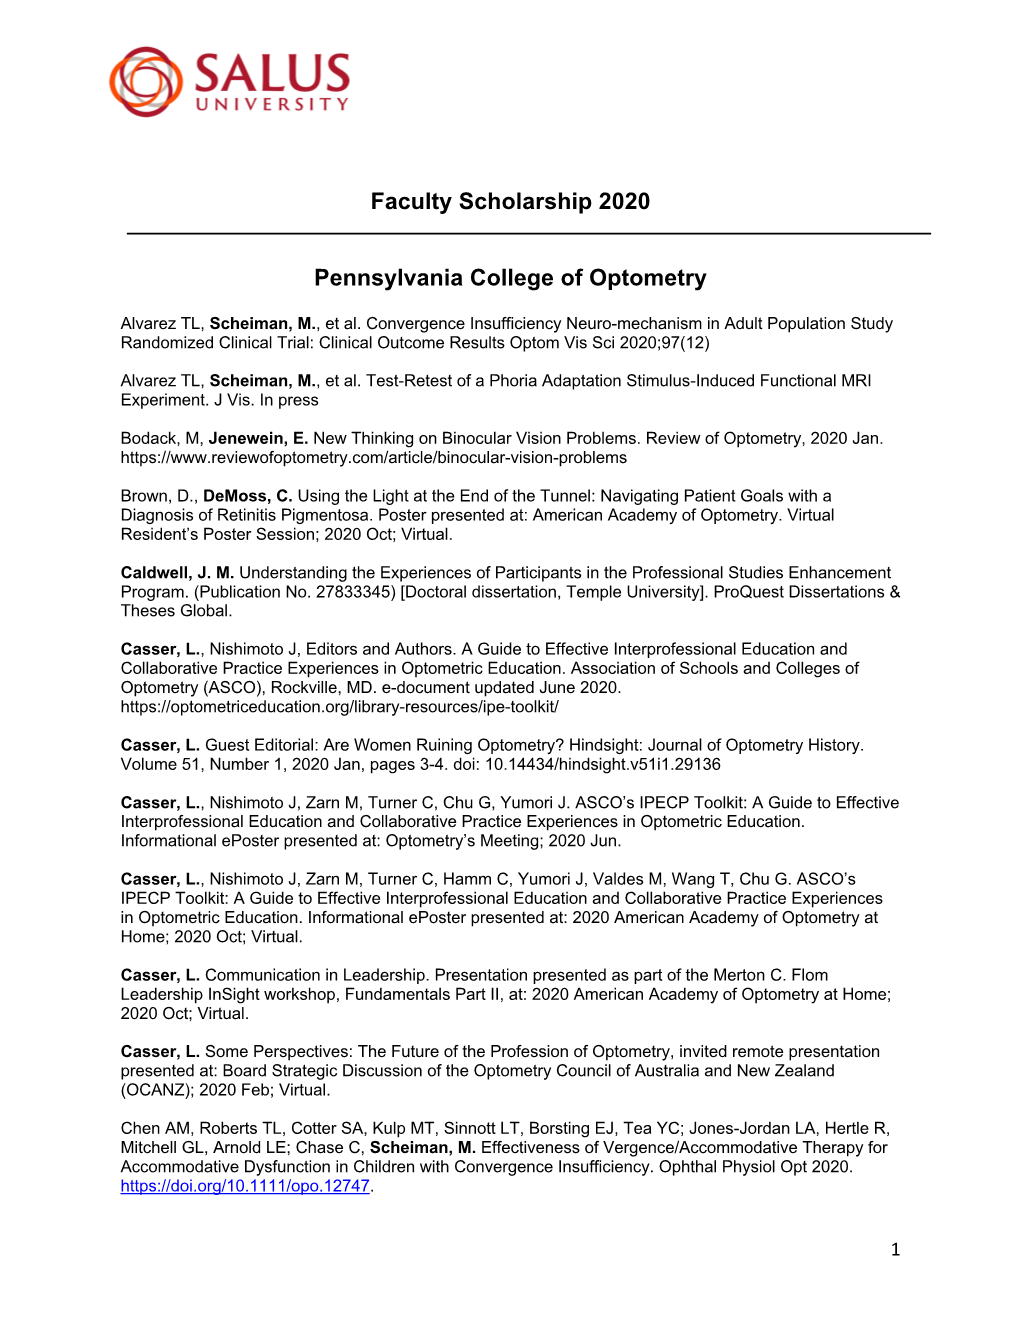 Faculty Scholarship 2020 Pennsylvania